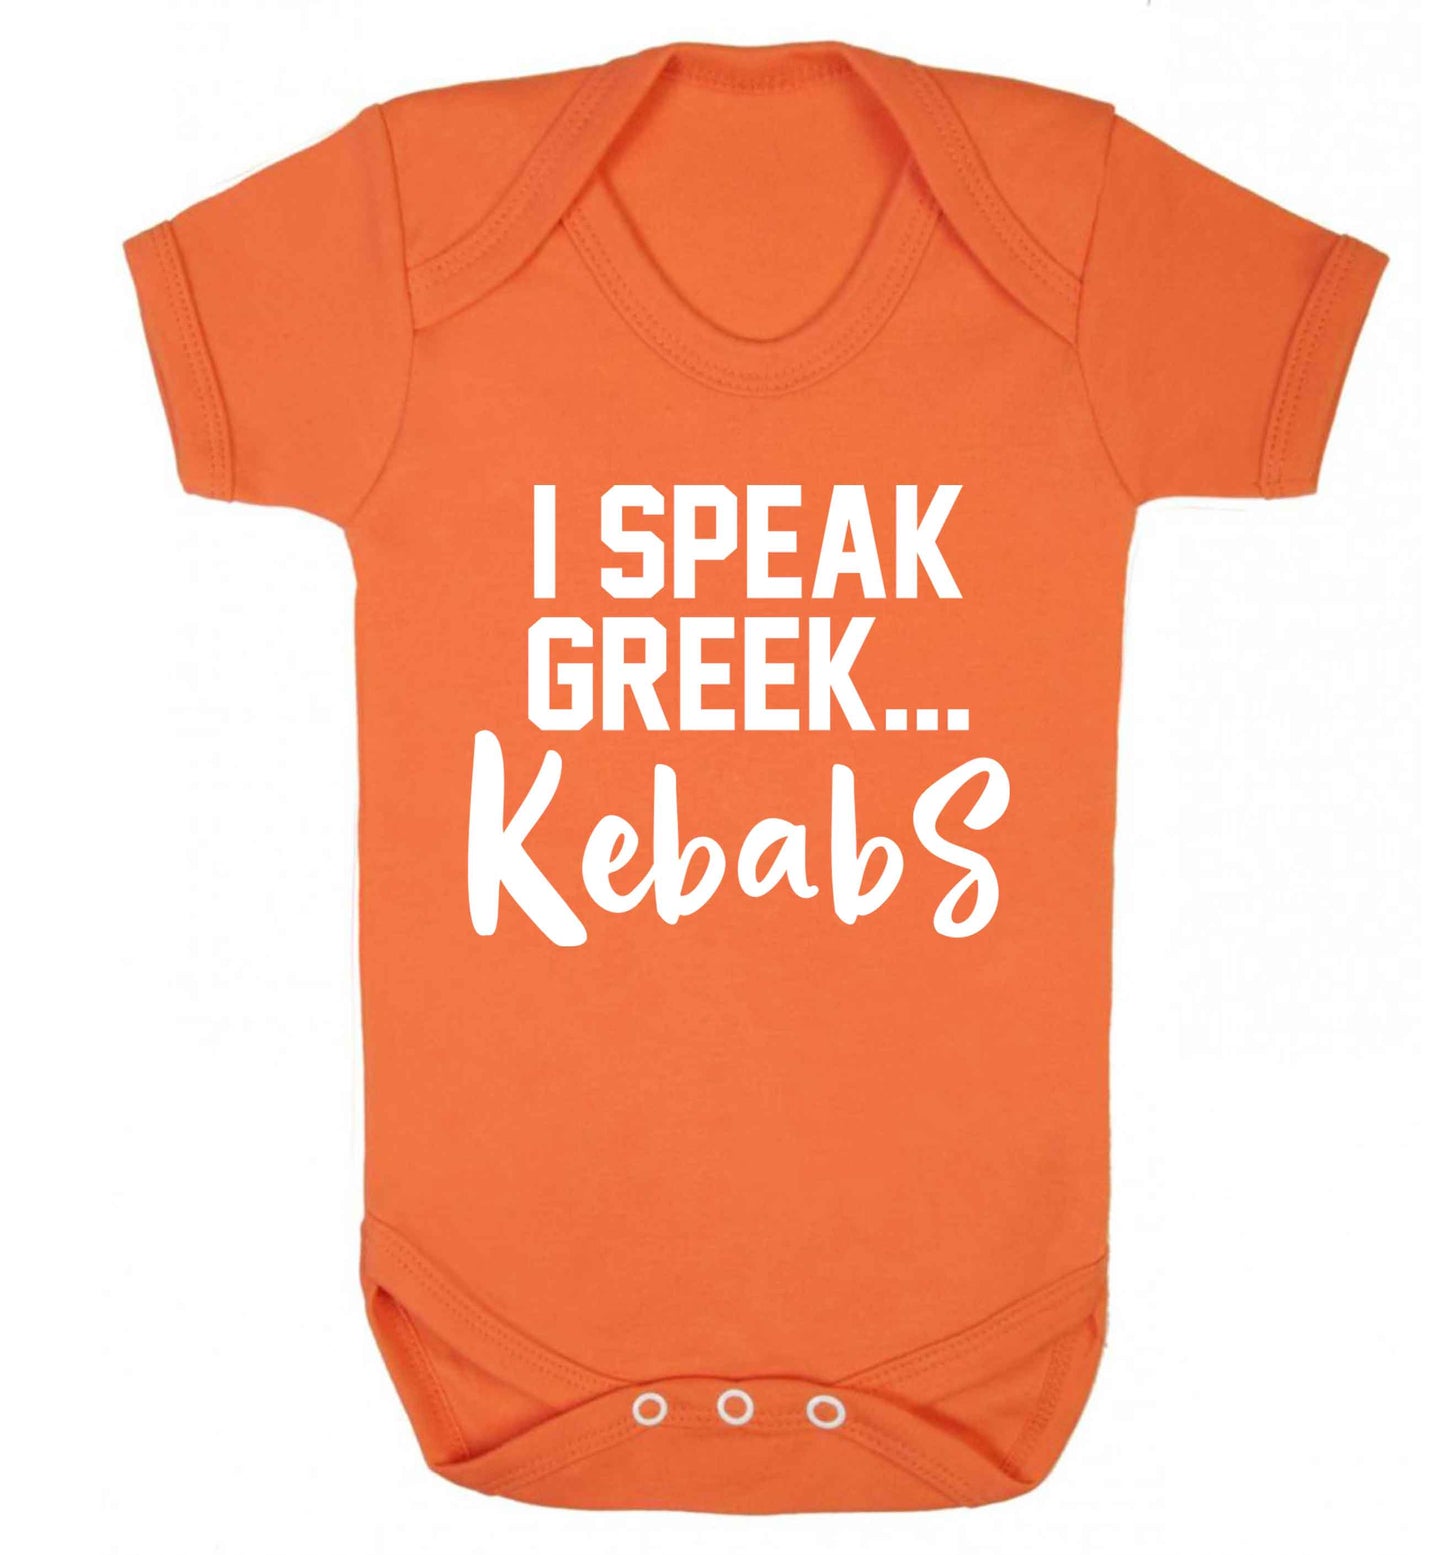 I speak Greek...kebabs Baby Vest orange 18-24 months